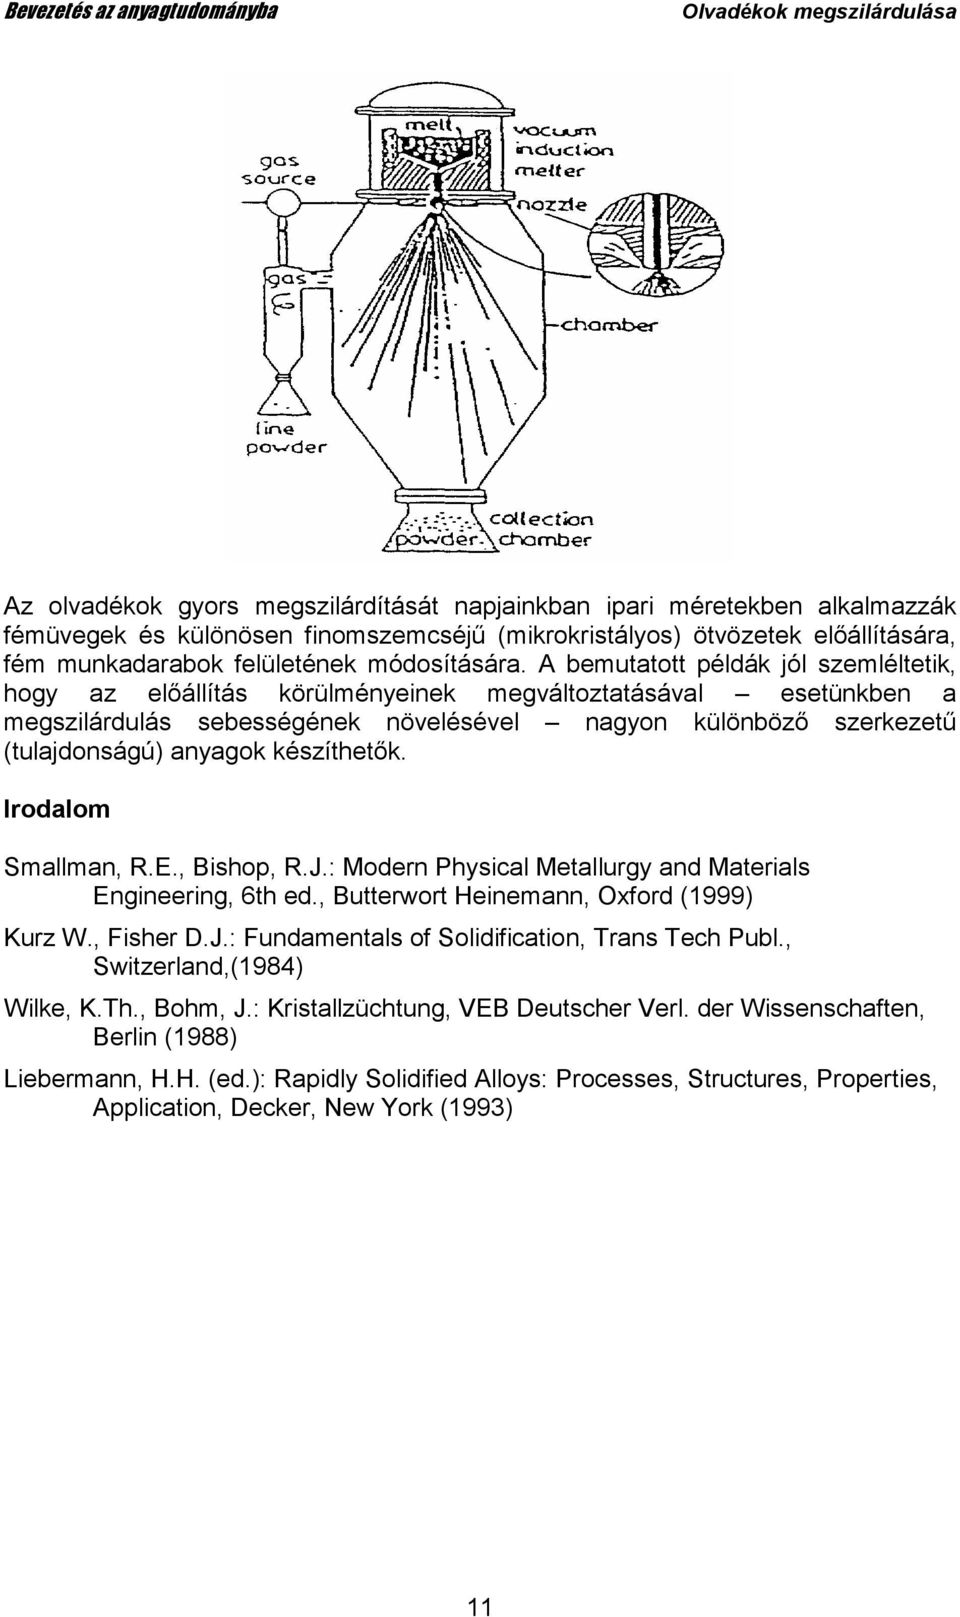 készíthetık. Irodalom Smallman, R.E., Bishop, R.J.: Modern Physical Metallurgy and Materials Engineering, 6th ed., Butterwort Heinemann, Oxford (1999) Kurz W., Fisher D.J.: Fundamentals of Solidification, Trans Tech Publ.